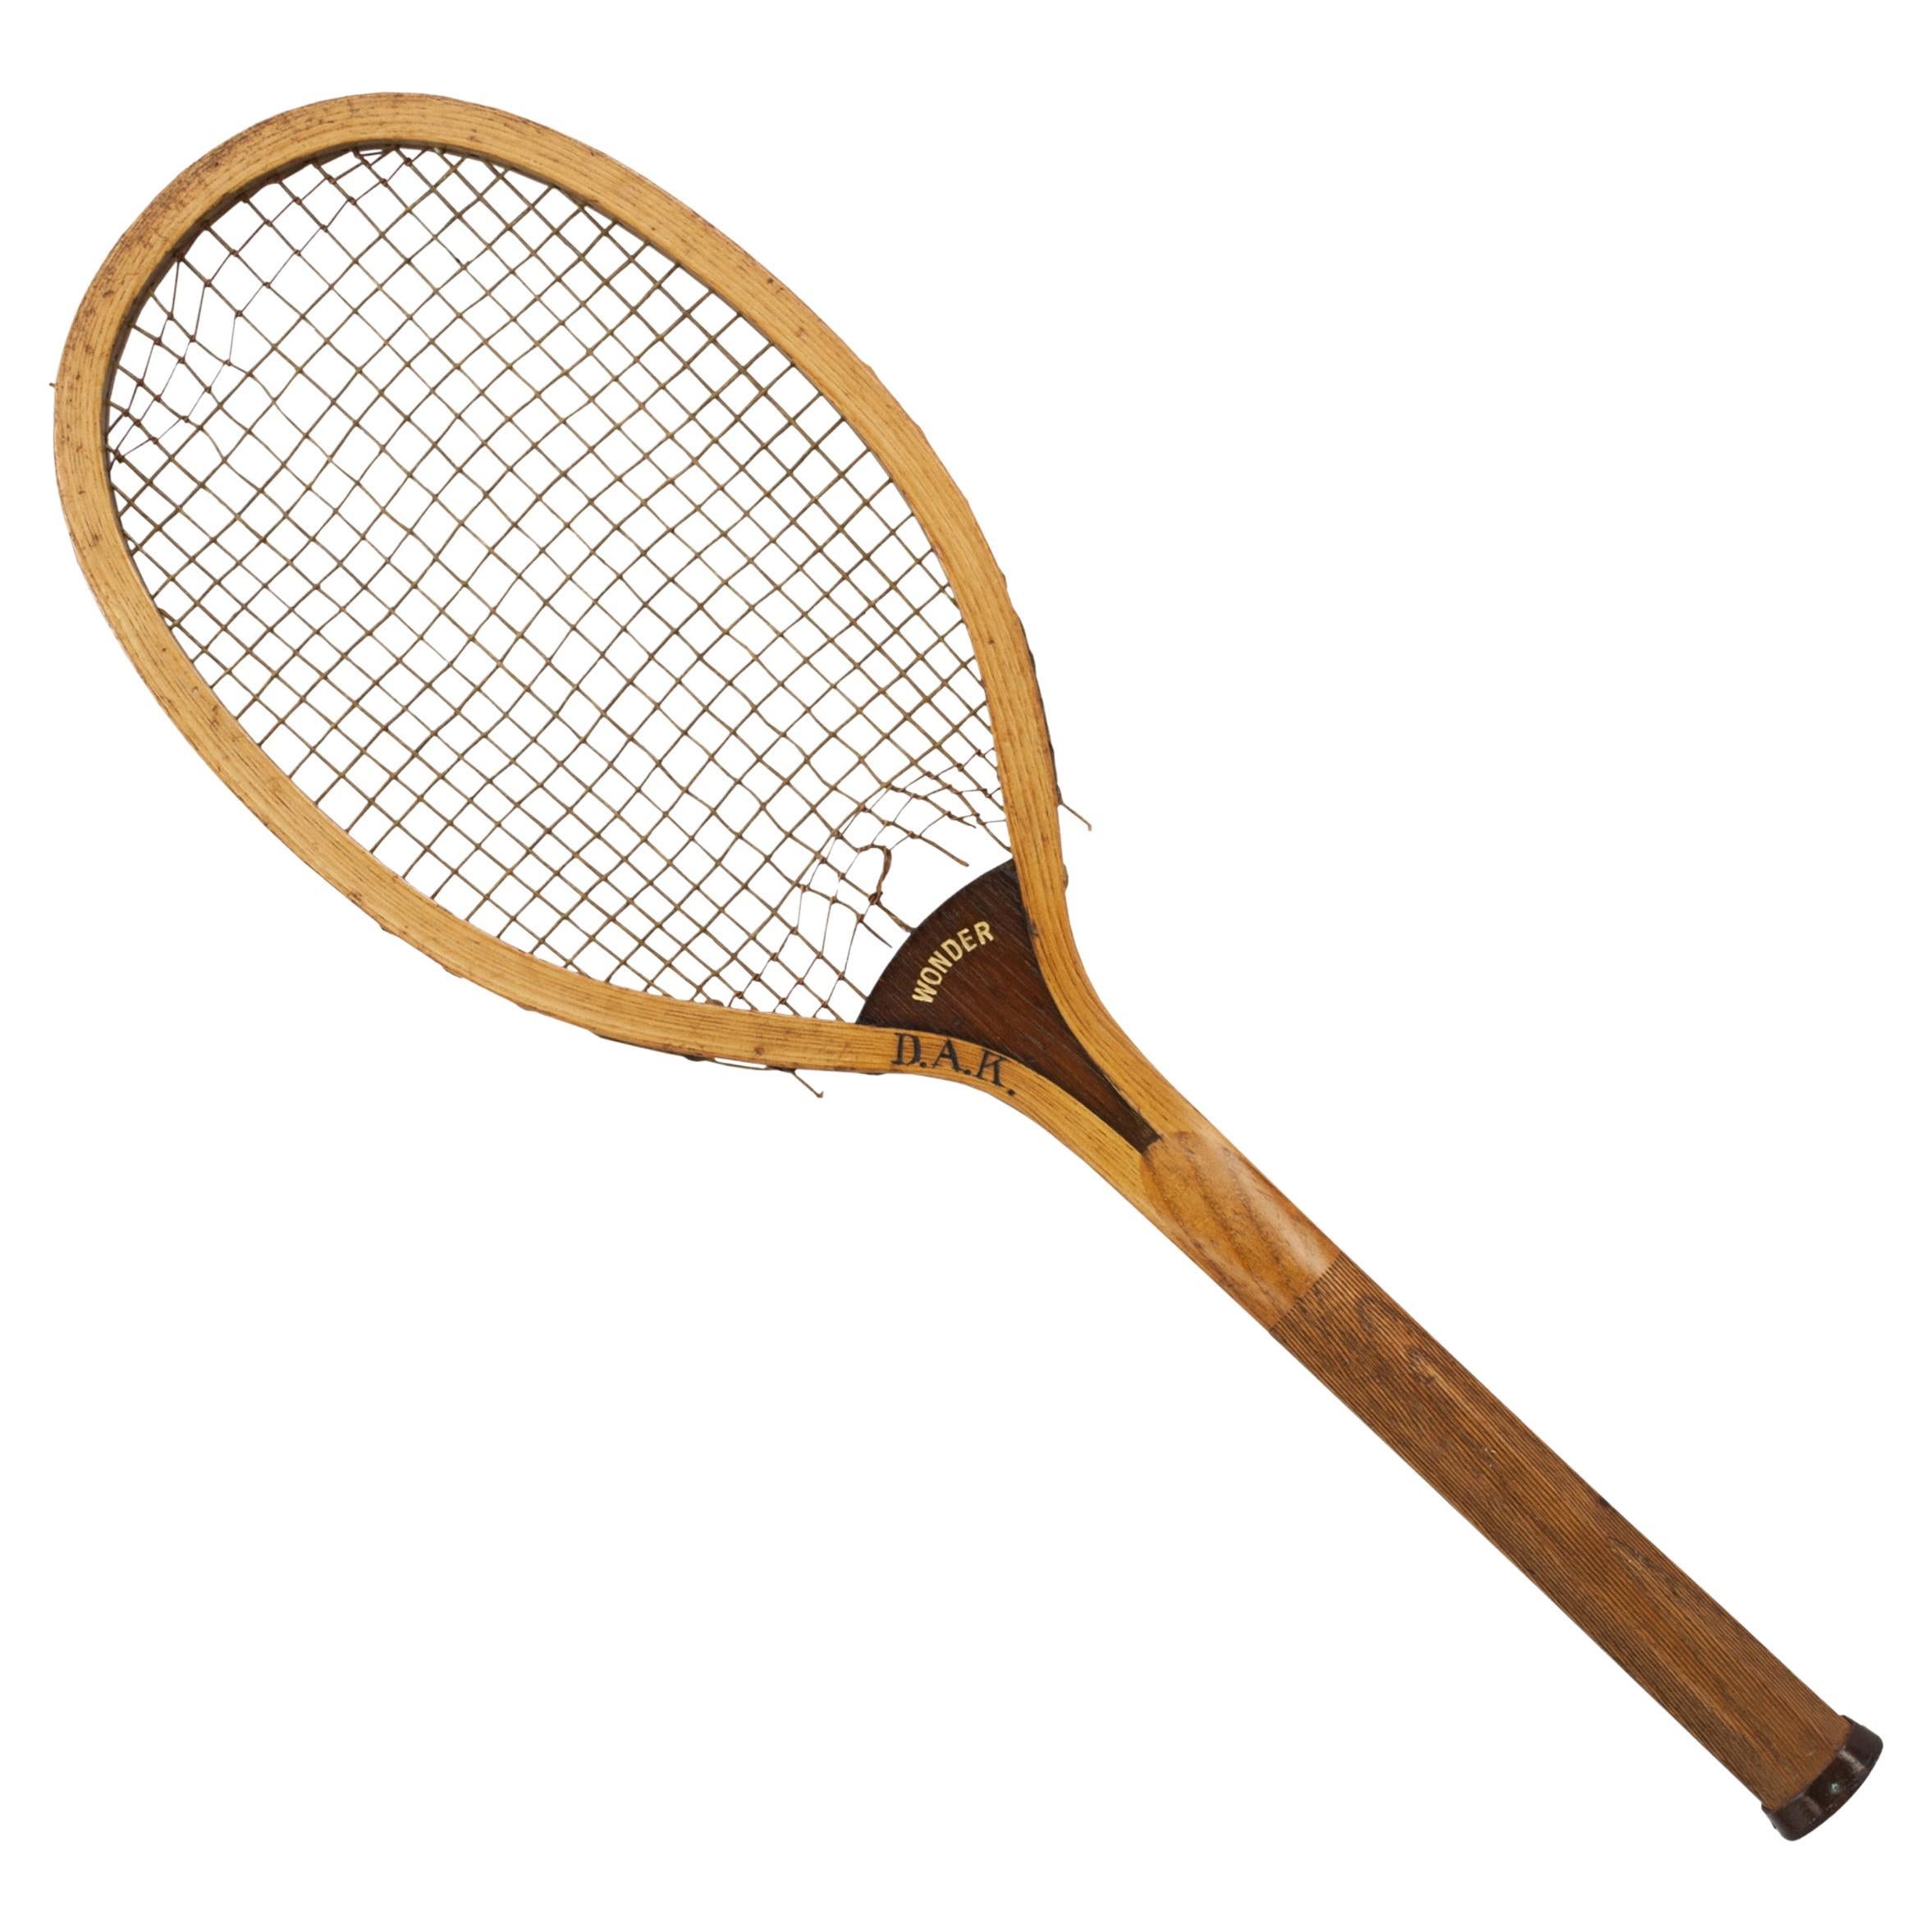 Wooden Lawn Tennis Racket, Wonder For Sale